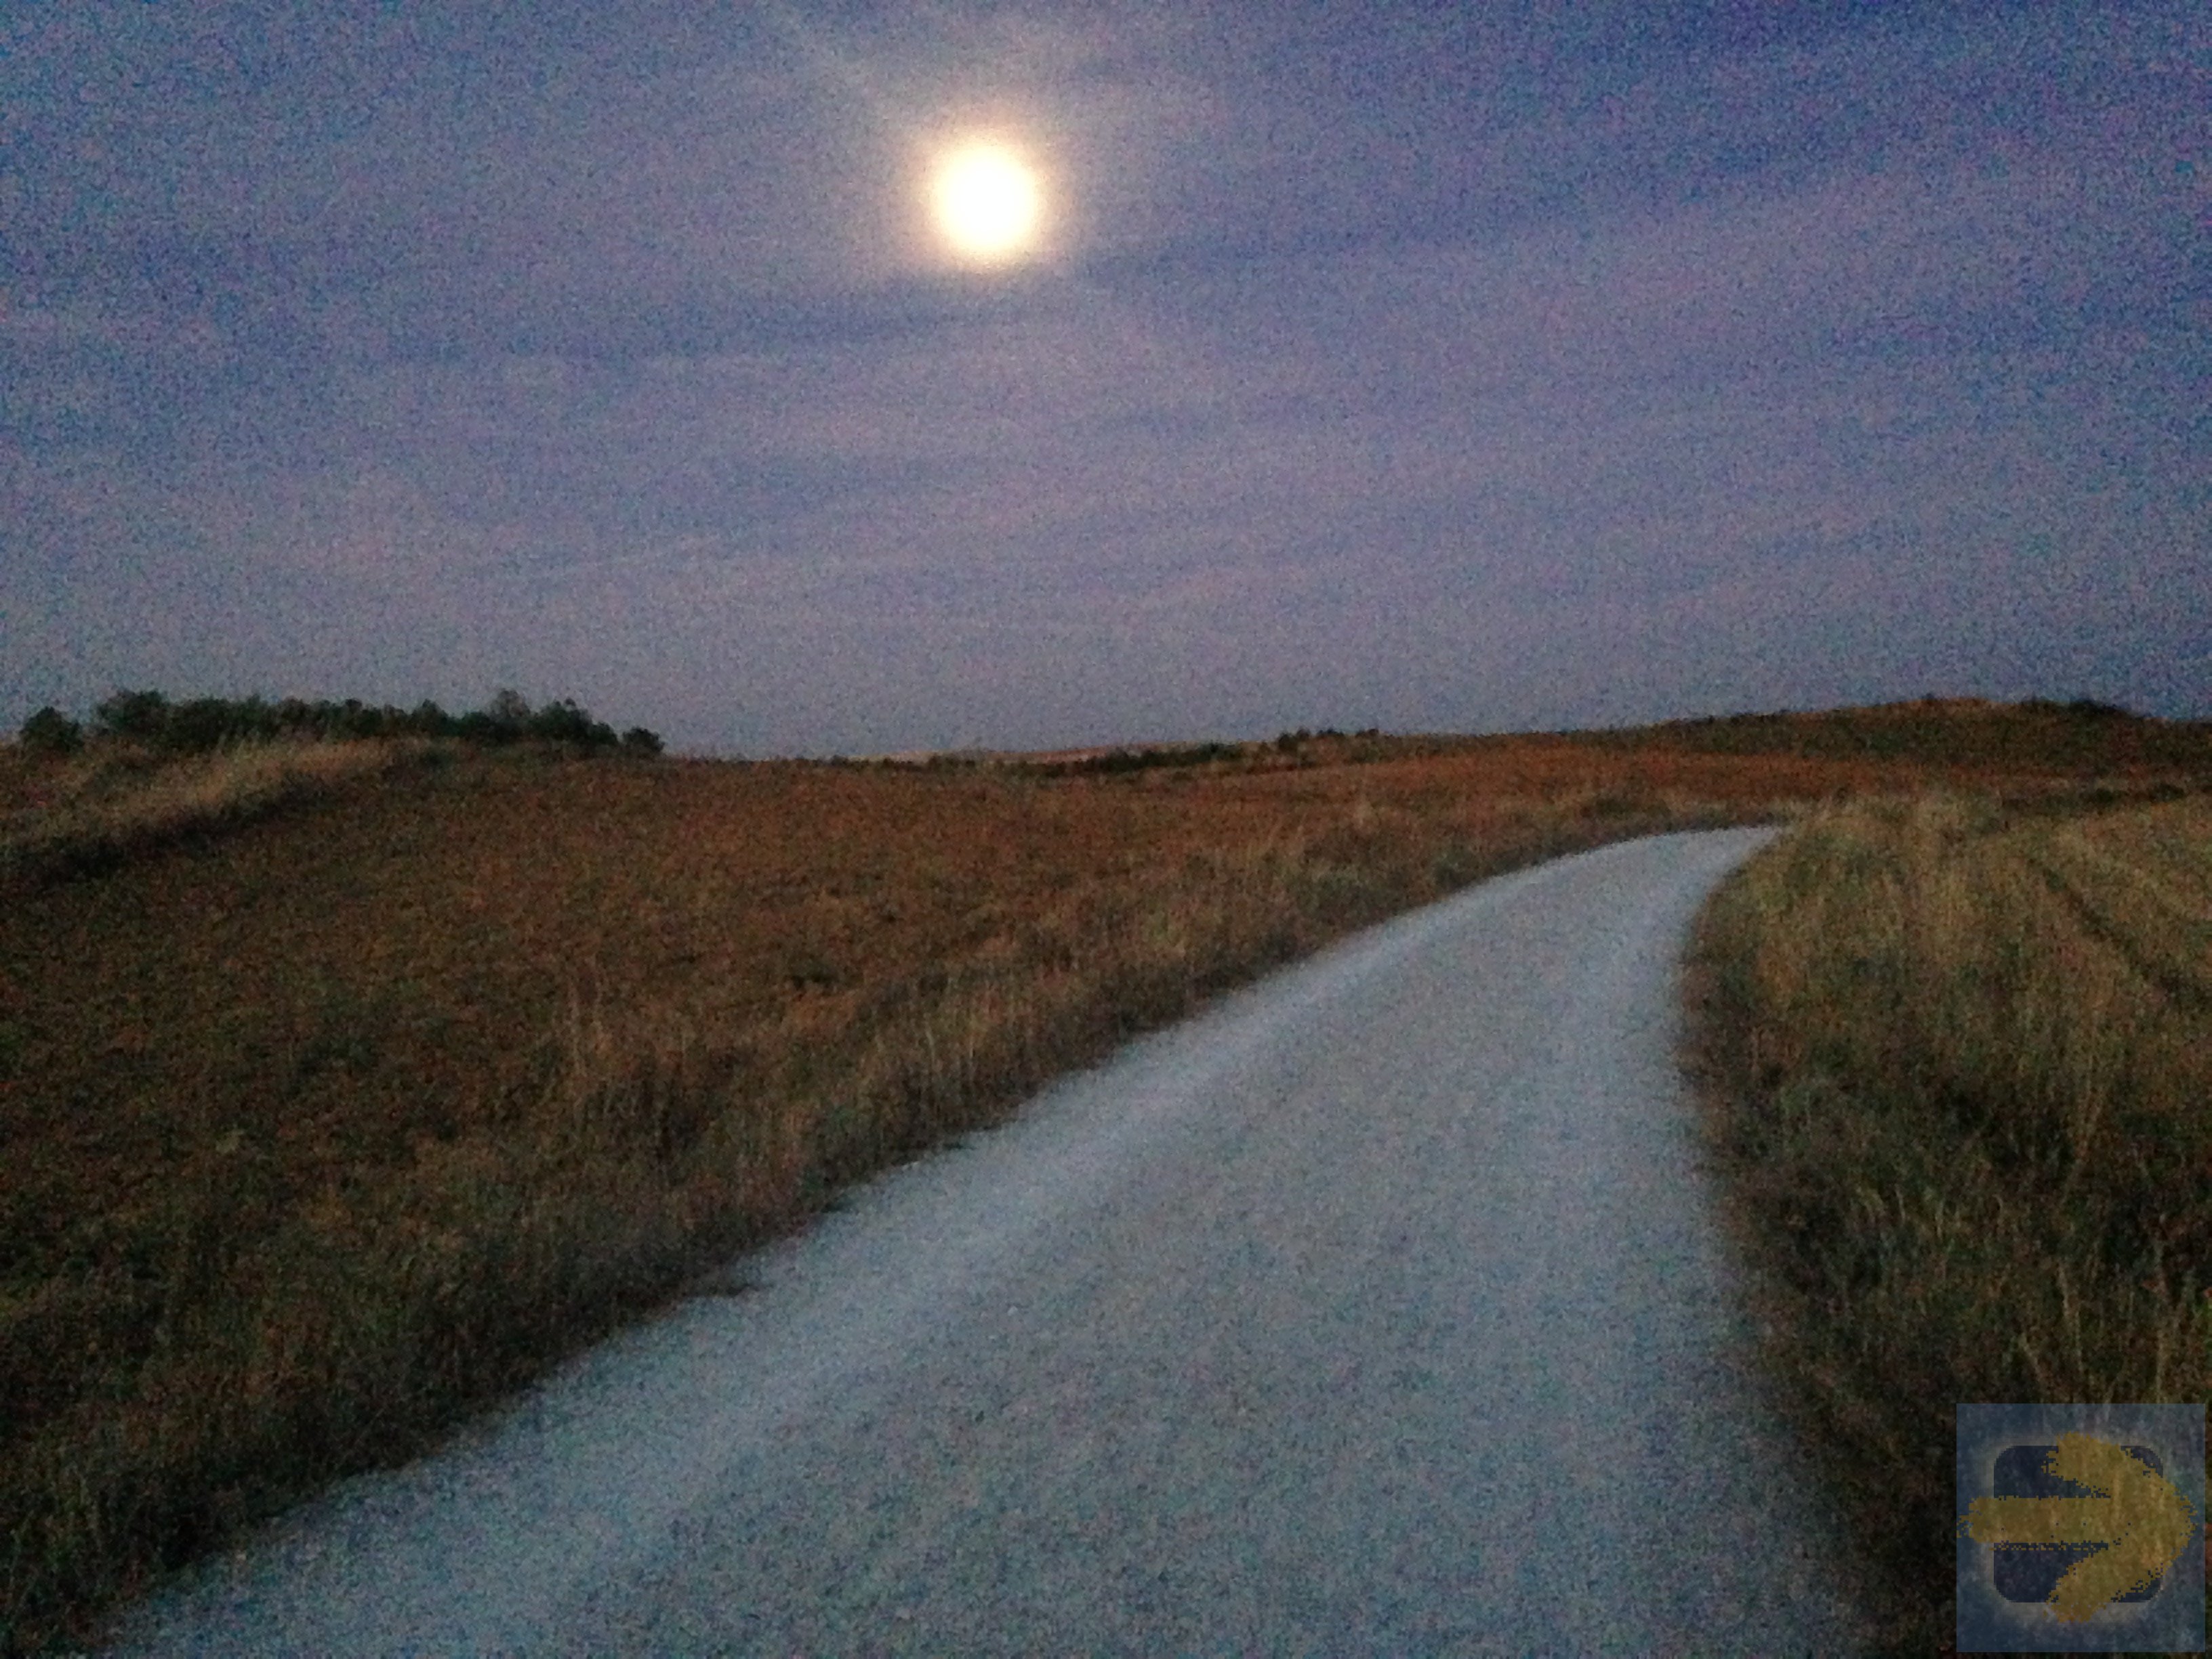 Walking under the morning moon